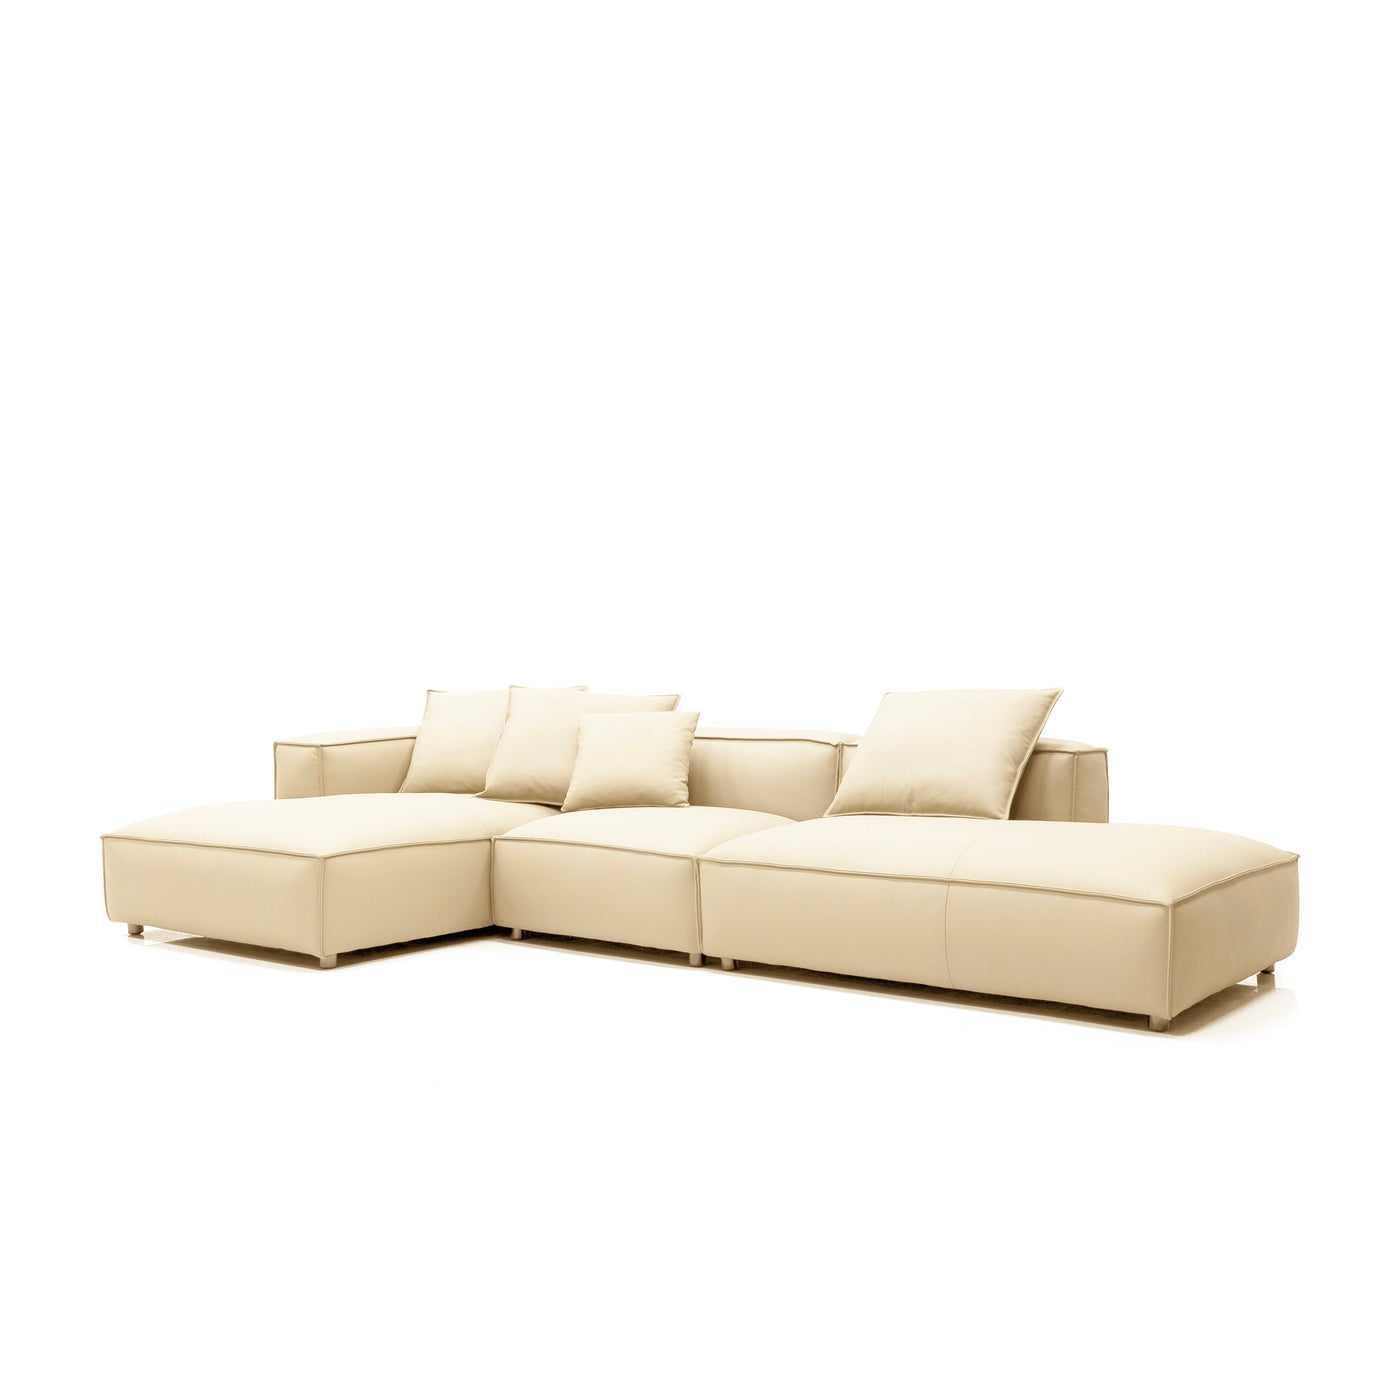 Hara Armless Sofa